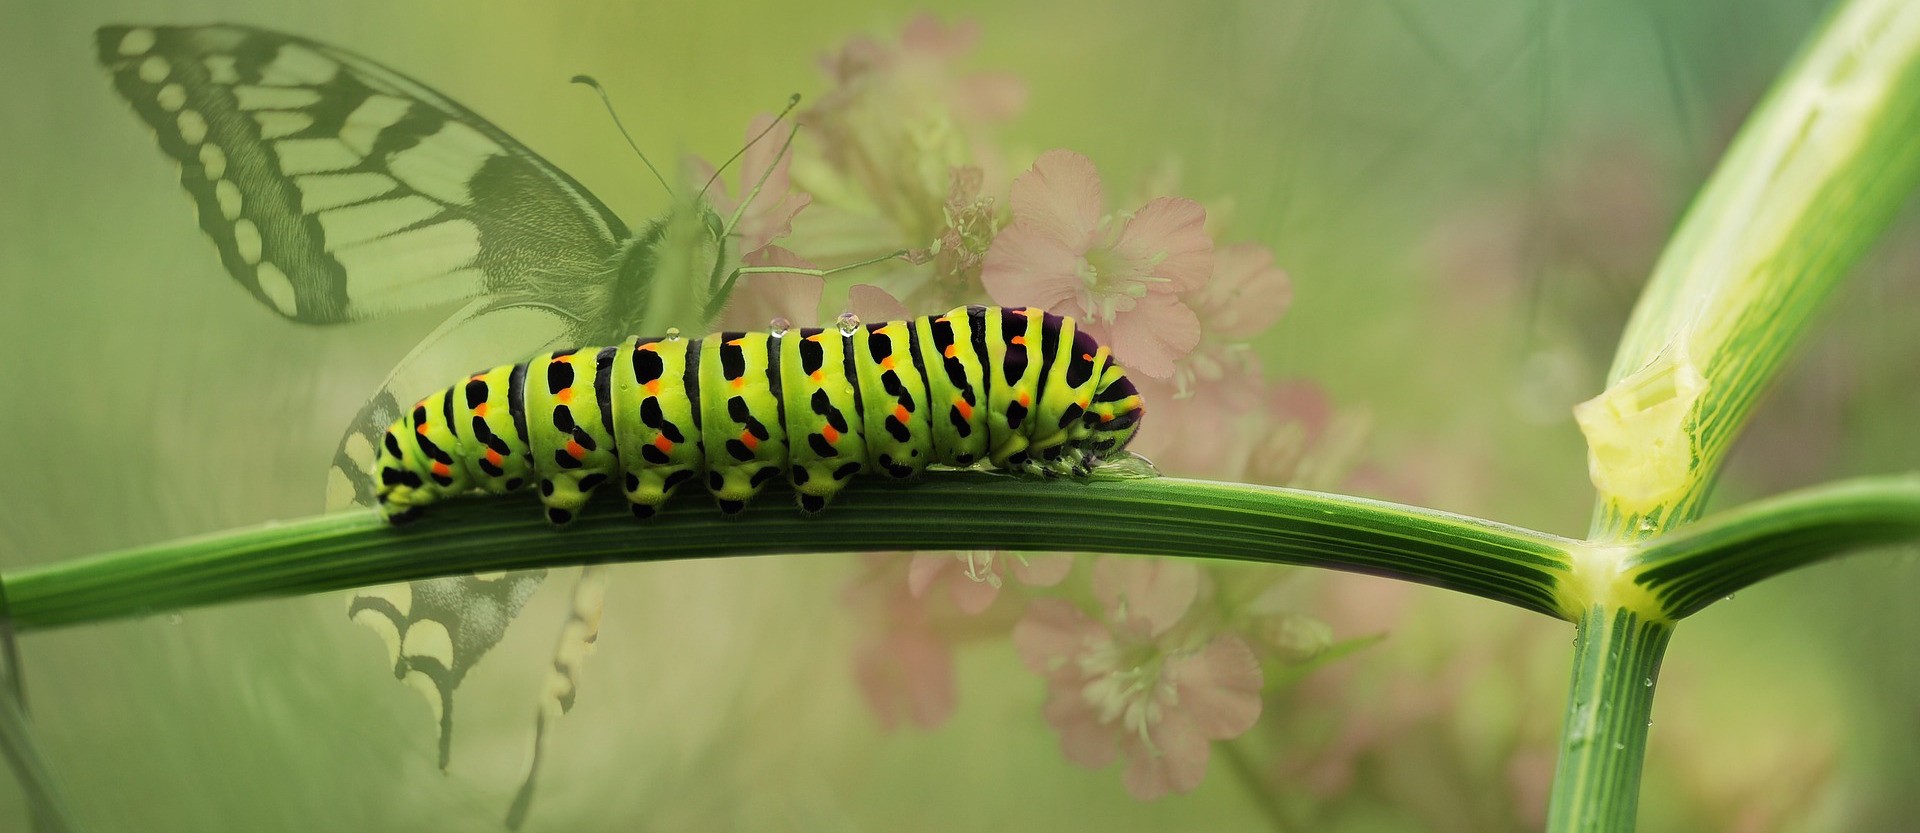 Caterpillar on stem